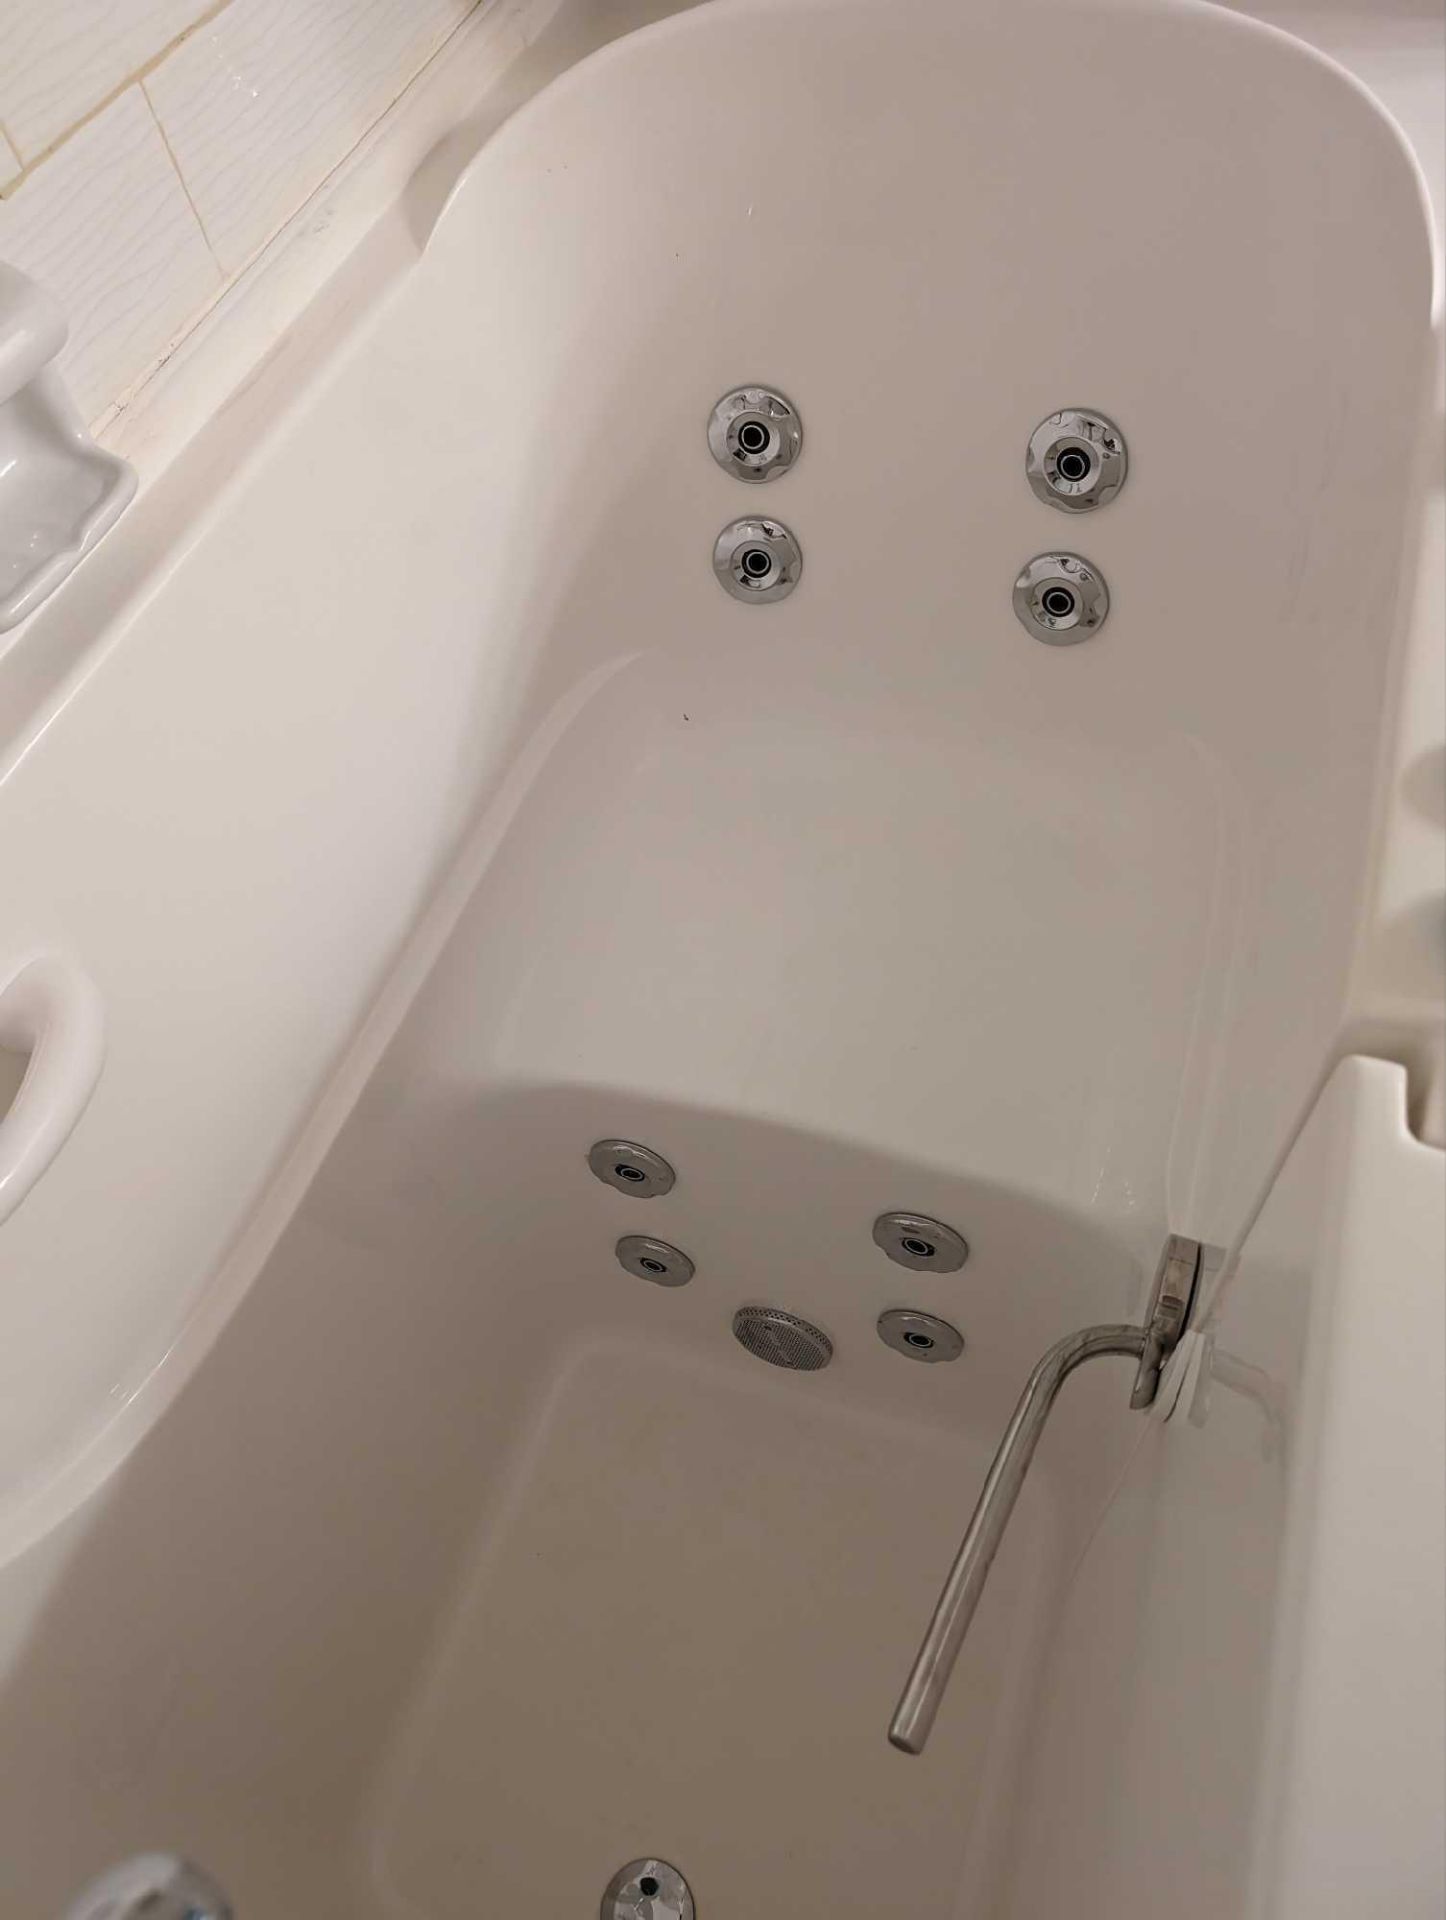 used safe economy 53"" left drain walk-in Whrilpool bathtub w/ jets.  (handheld shower is broken) (w - Image 5 of 5